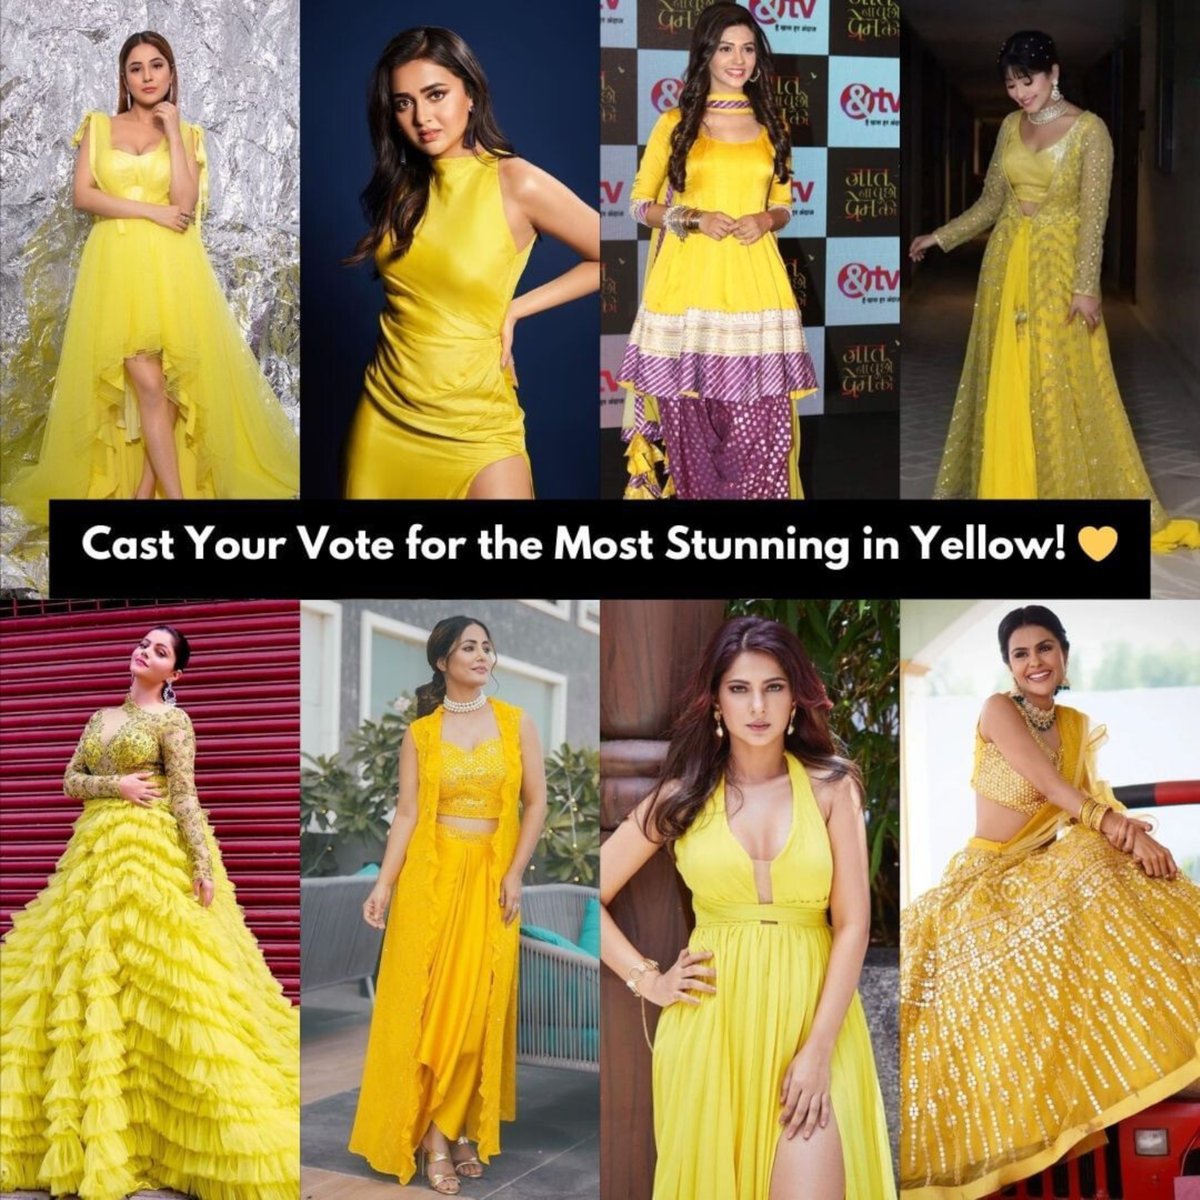 Cast Your Vote for the Most Stunning in Yellow! ☀️💛
.
.
.
.
.
#shehnaazgill #tejasswiprakash #pranalirathod #shivangijoshi #rubinadilaik #hinakhan #jenniferwinget #priyankachaharchoudhary #outfitoftheday #Poll #ownpoll #polloftheday